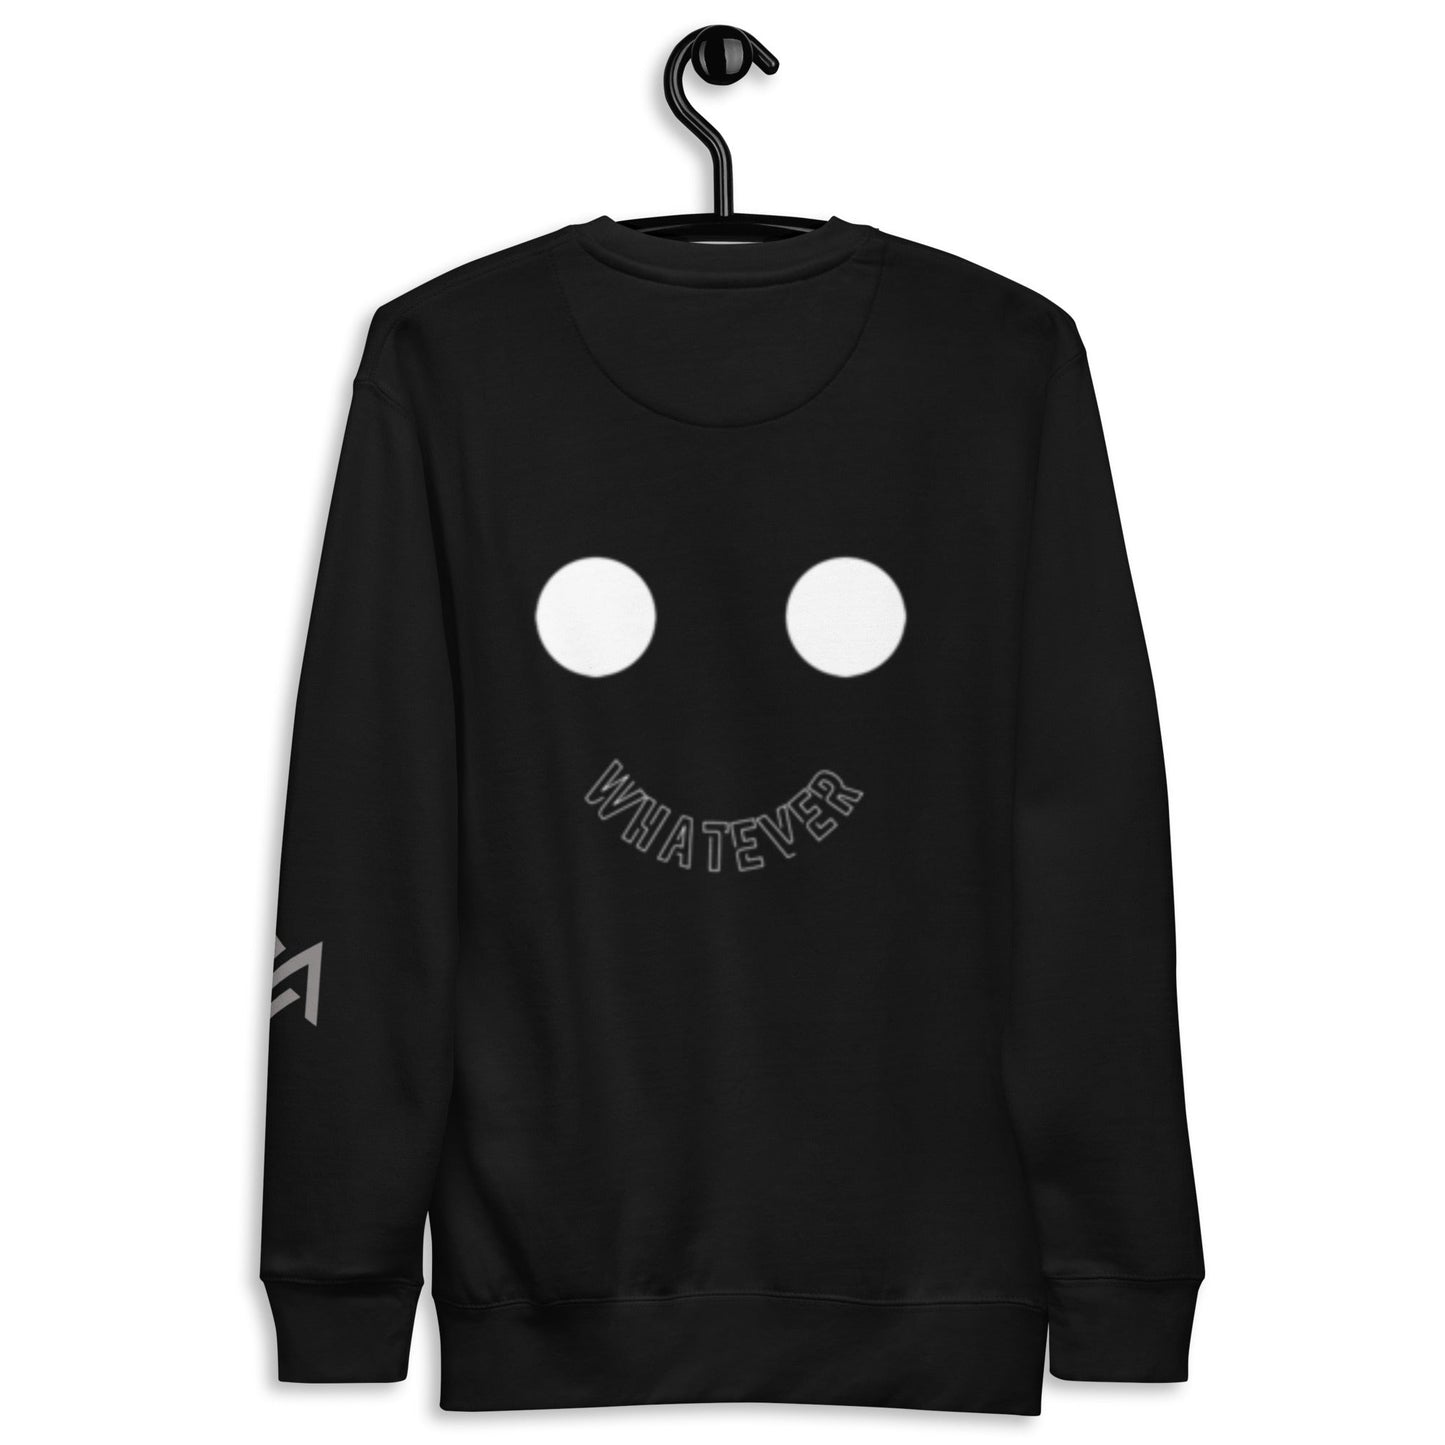 BlackMars Whatever Woman’s Sweatshirt - Premium  from BlackMars  - Just £35! Shop now at BlackMars 35BlackMars 